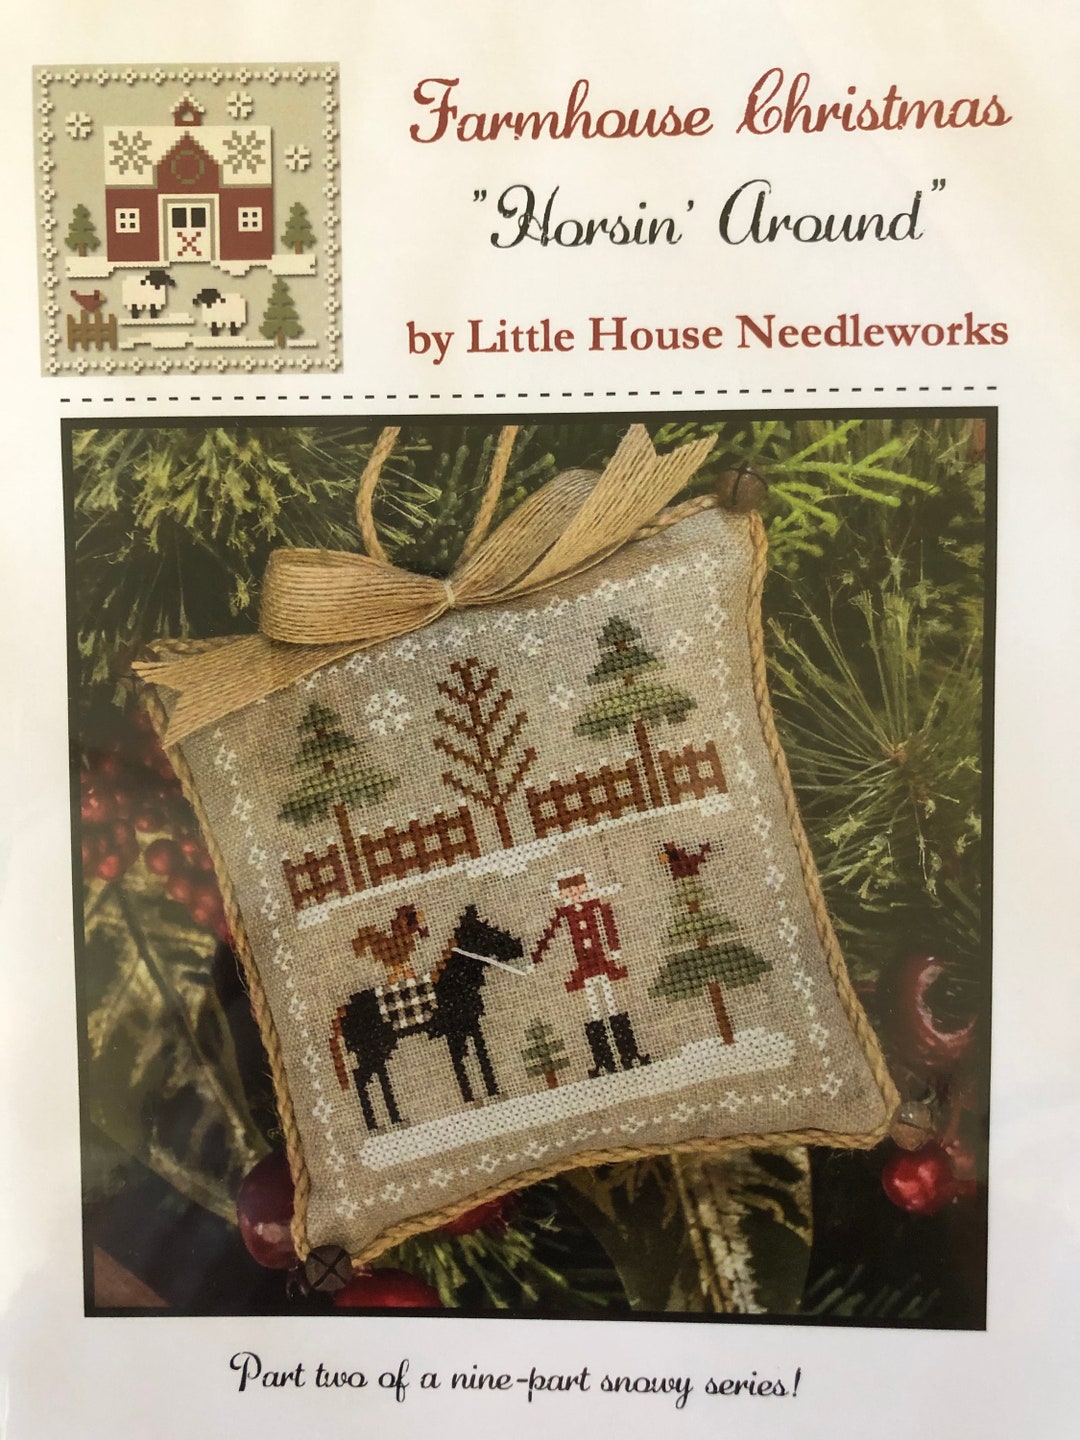 Little House Needleworks/ Farmhouse Christmas / HORSIN AROUND - Etsy